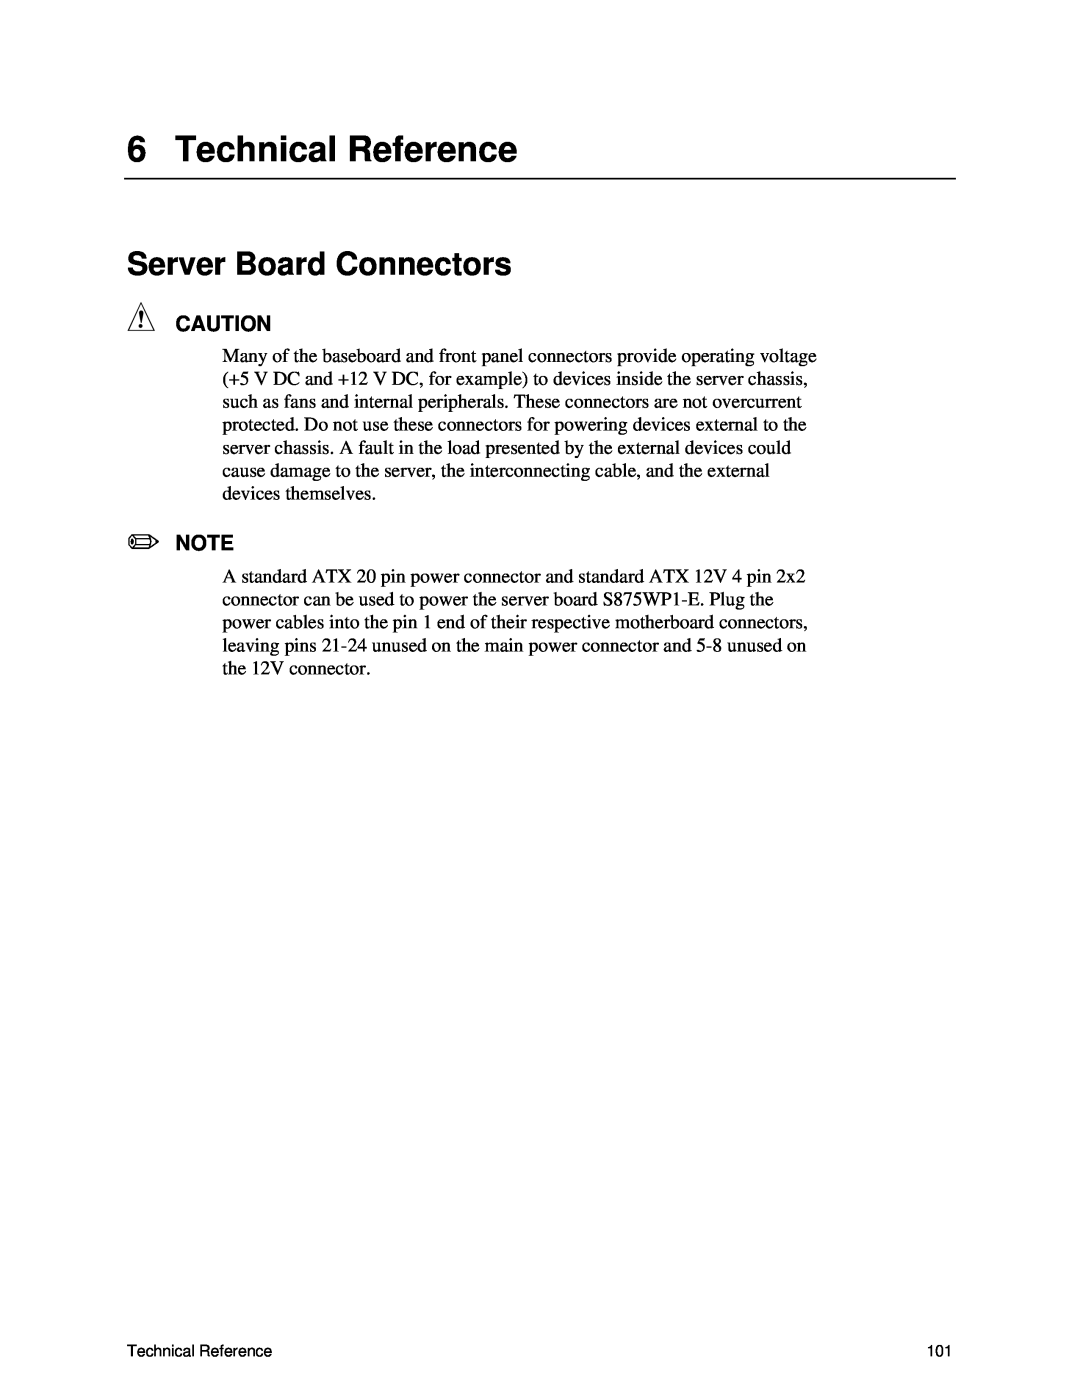 Intel S875WP1-E manual Technical Reference, Server Board Connectors 